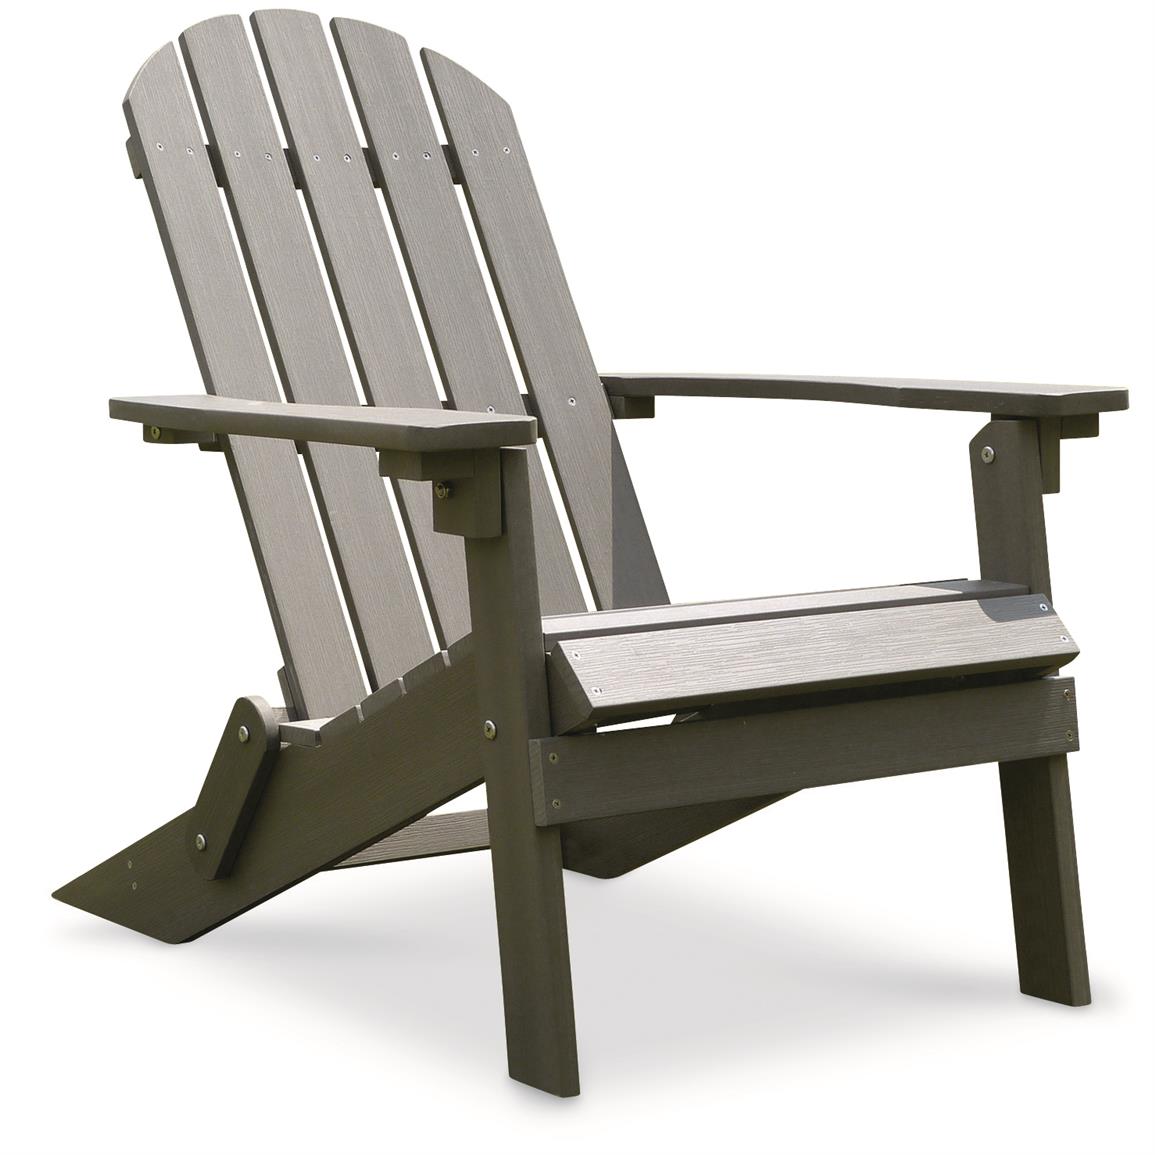 CASTLECREEK Resin Folding Adirondack Chair - 676470, Patio Furniture at